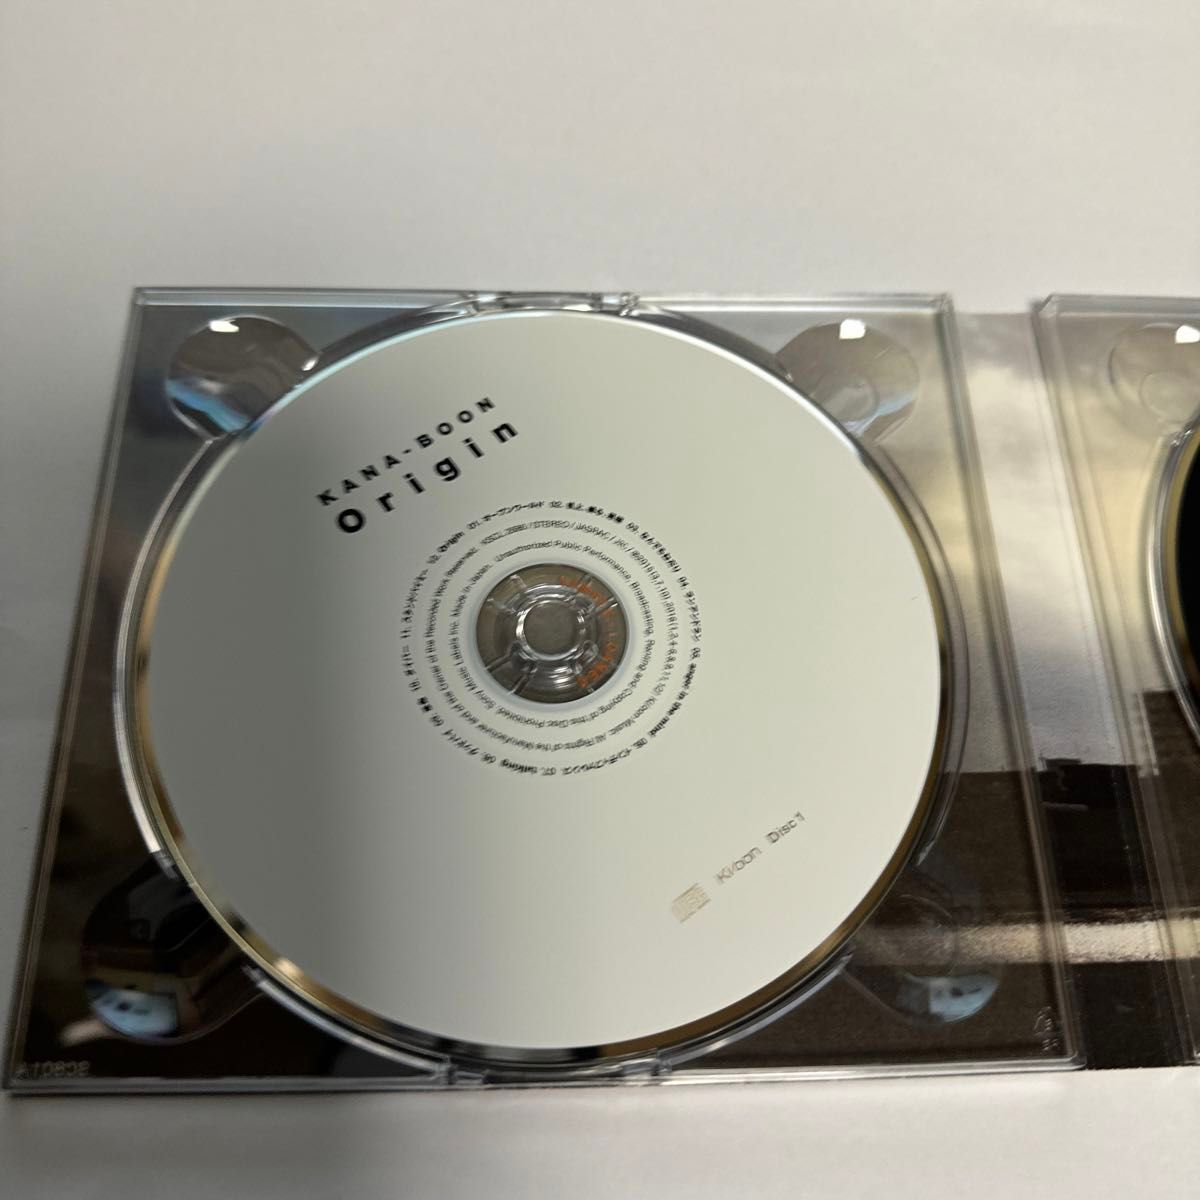 ＫＡＮＡ−ＢＯＯＮ初回限／Ａ】 Ｏｒｉｇｉｎ　CD2枚組　レア盤　オマケCD付き